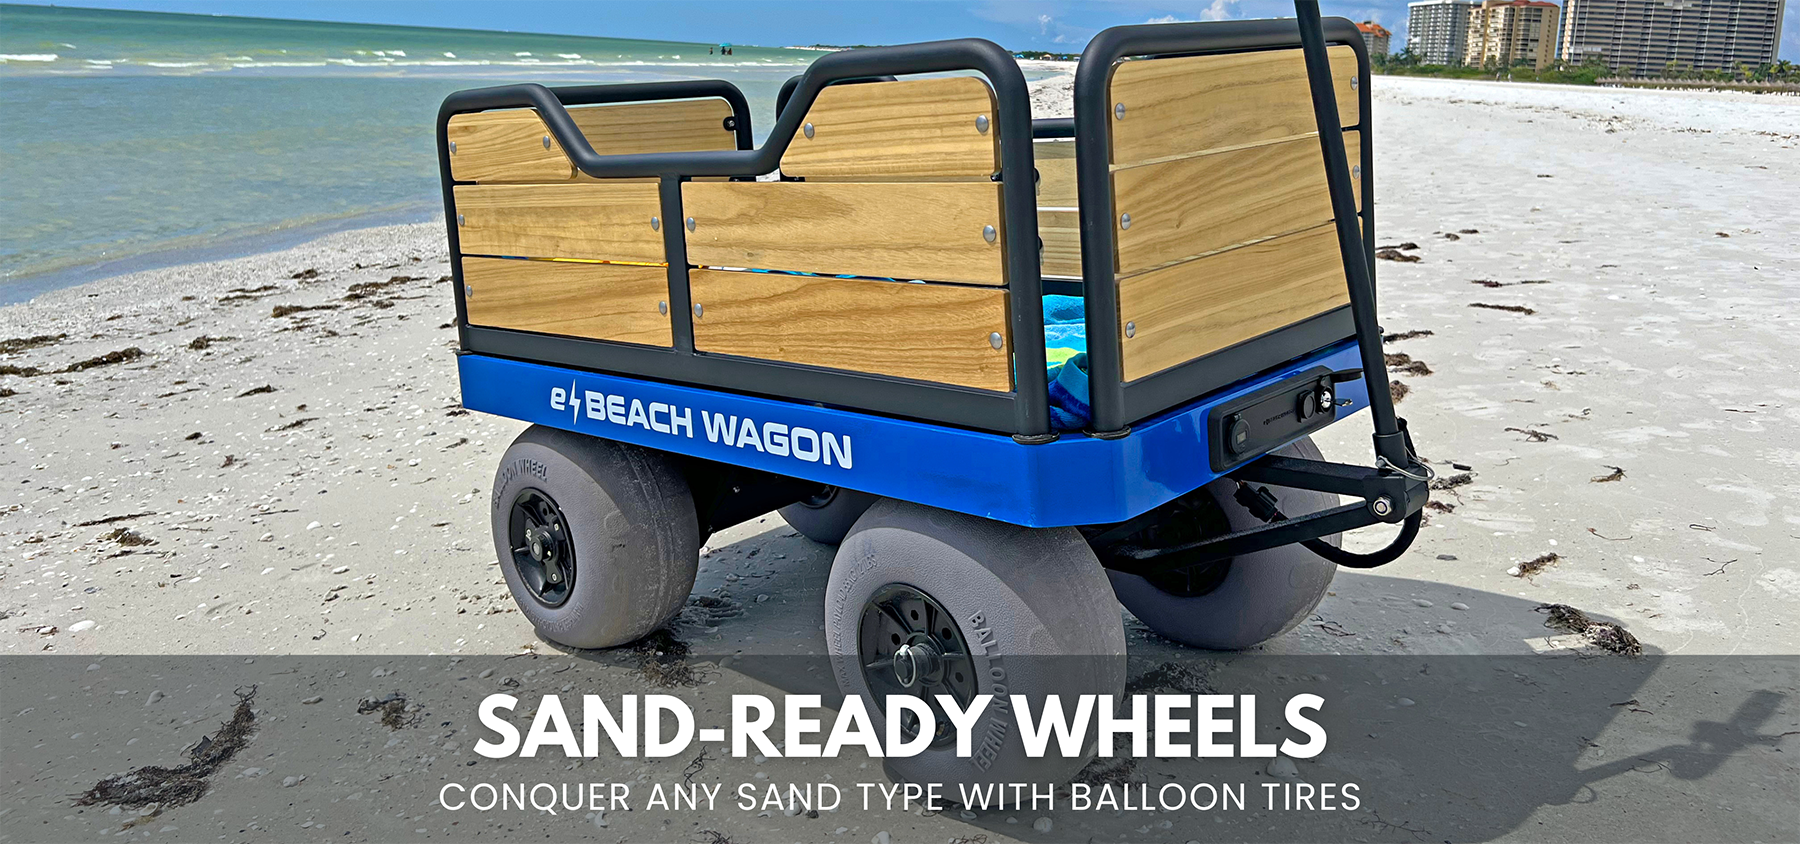 Sand-ready wheels with e-Beach Wagon